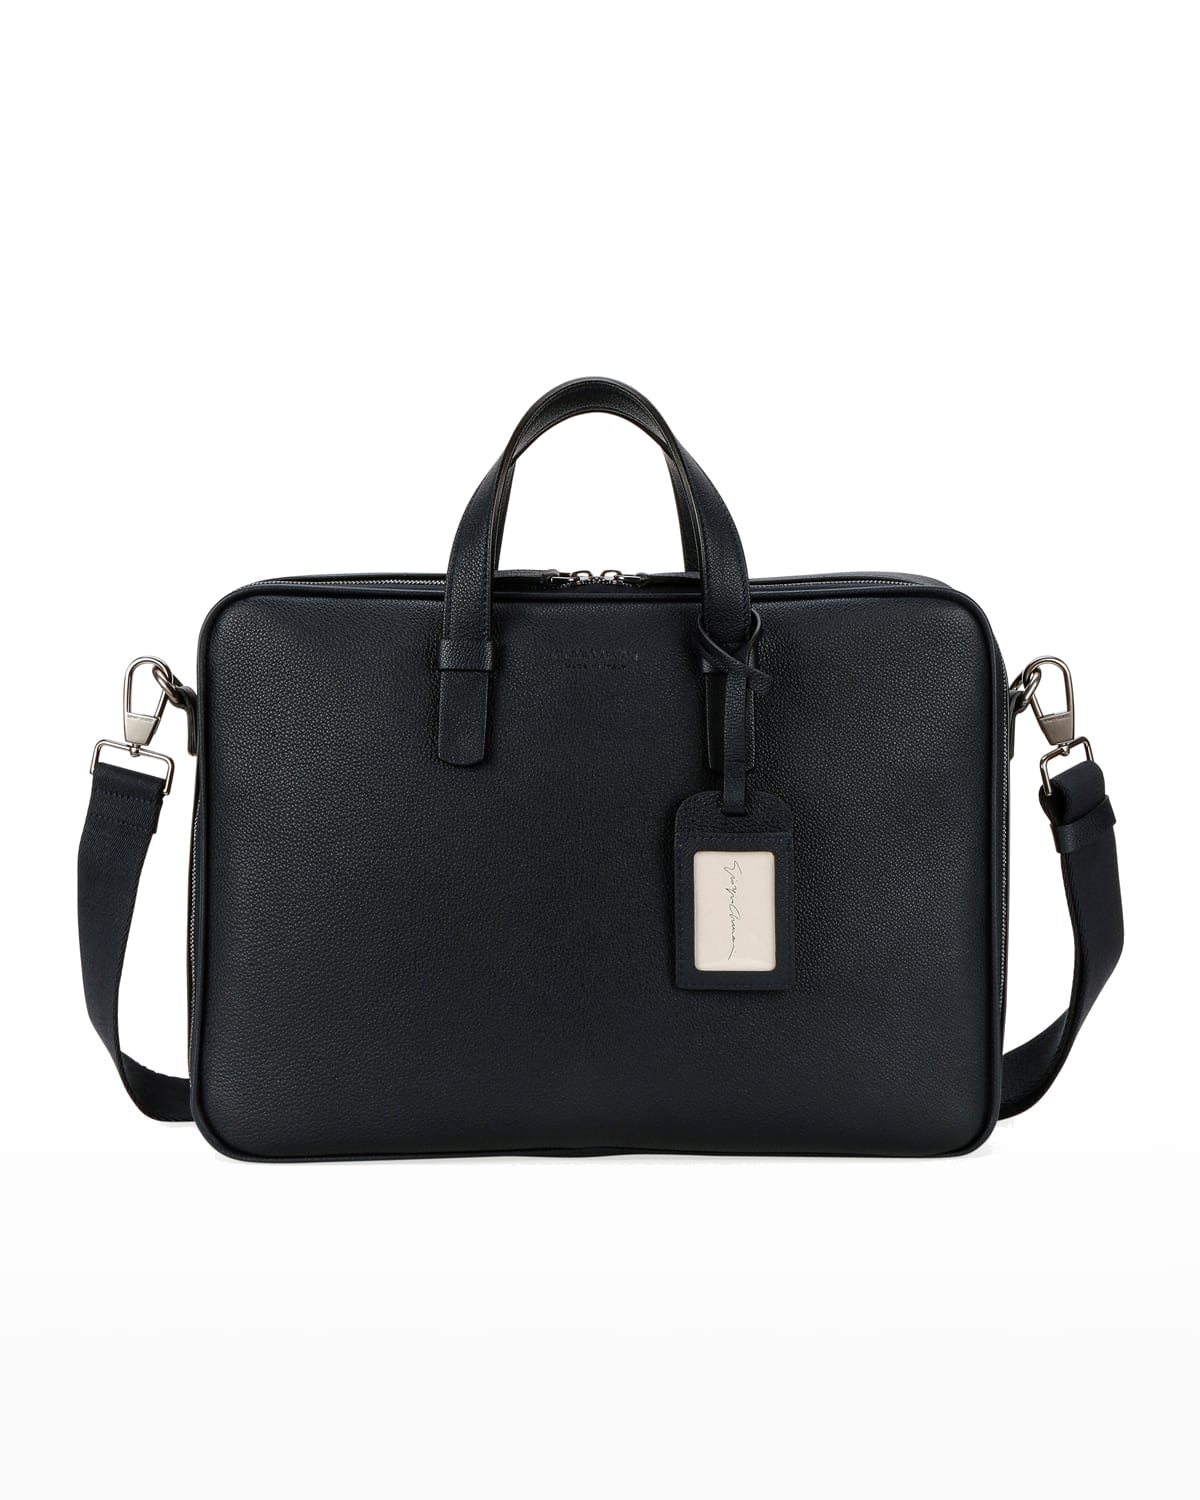 Giorgio Armani Men's Leather Briefcase Bag With Id Tag